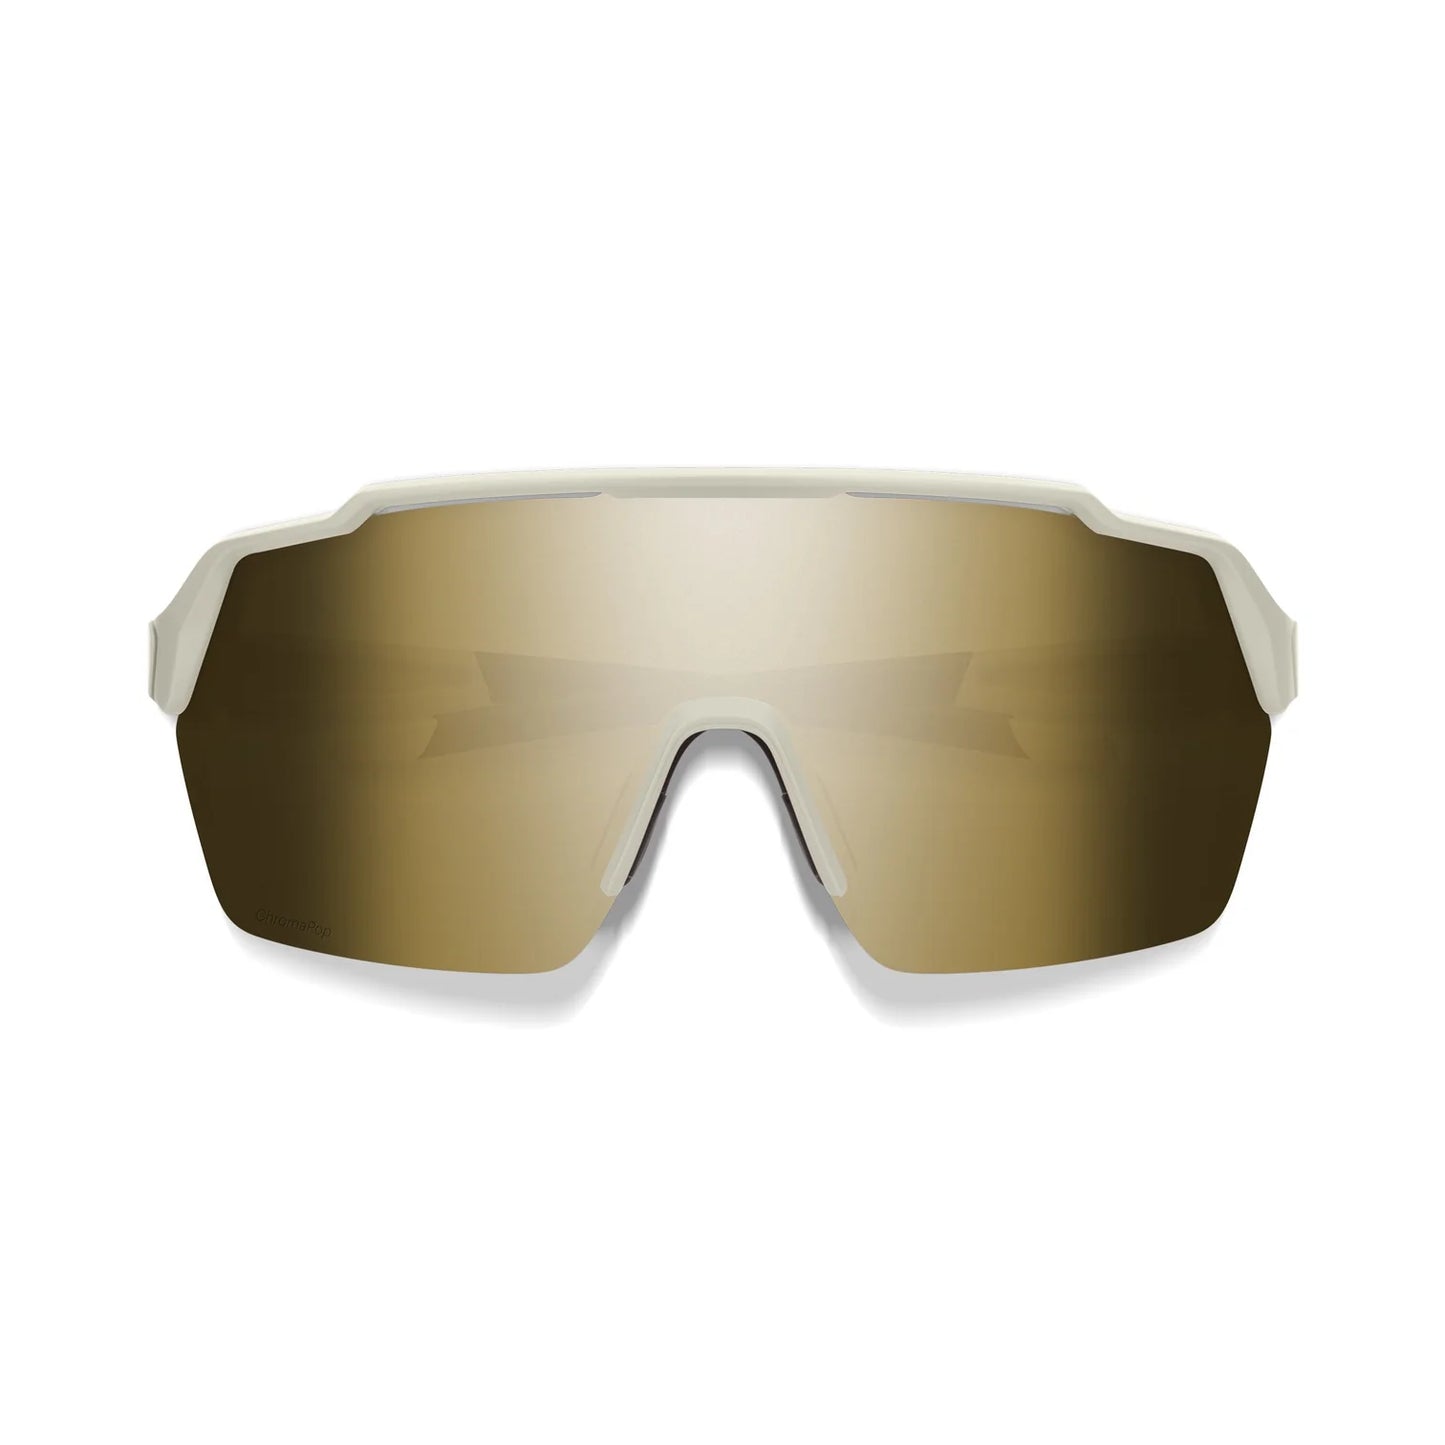 Smith Shift Split Mag Sunglasses - One Size Fits Most - Matte Bone - ChromaPop Black Gold Mirror Lens